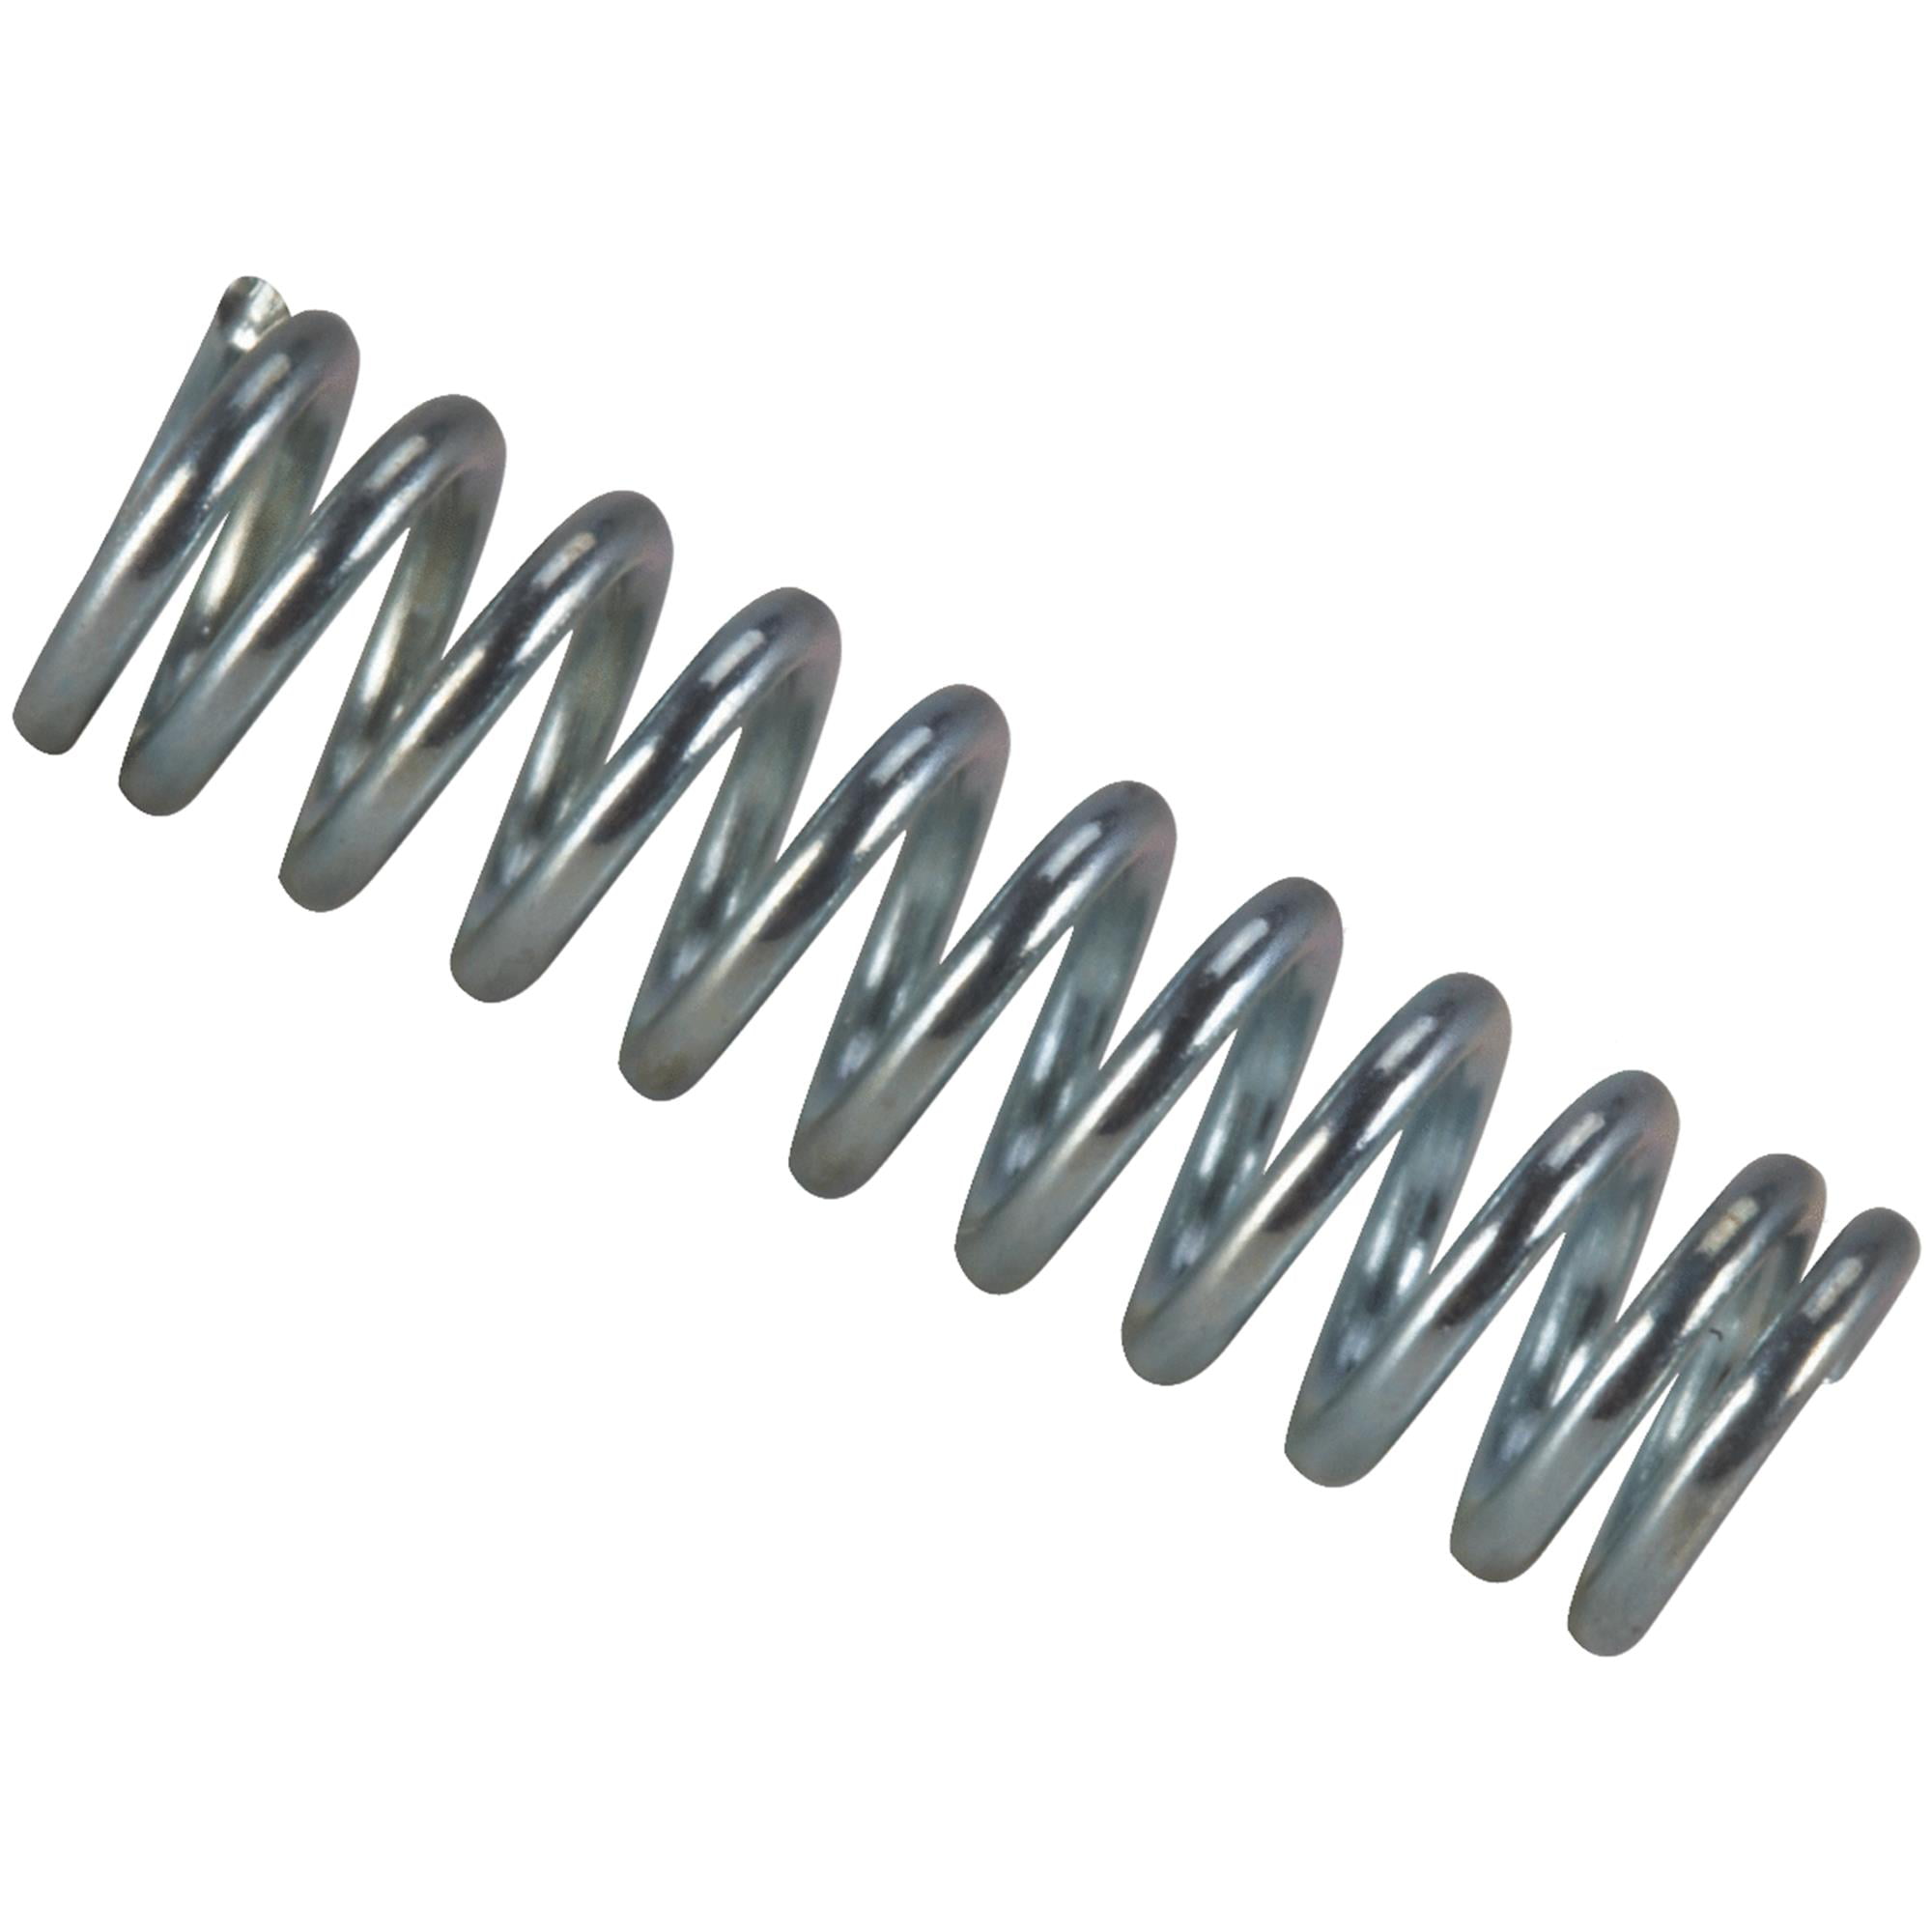 3 springs 1” x 4-1/2” heavy load compression die spring 